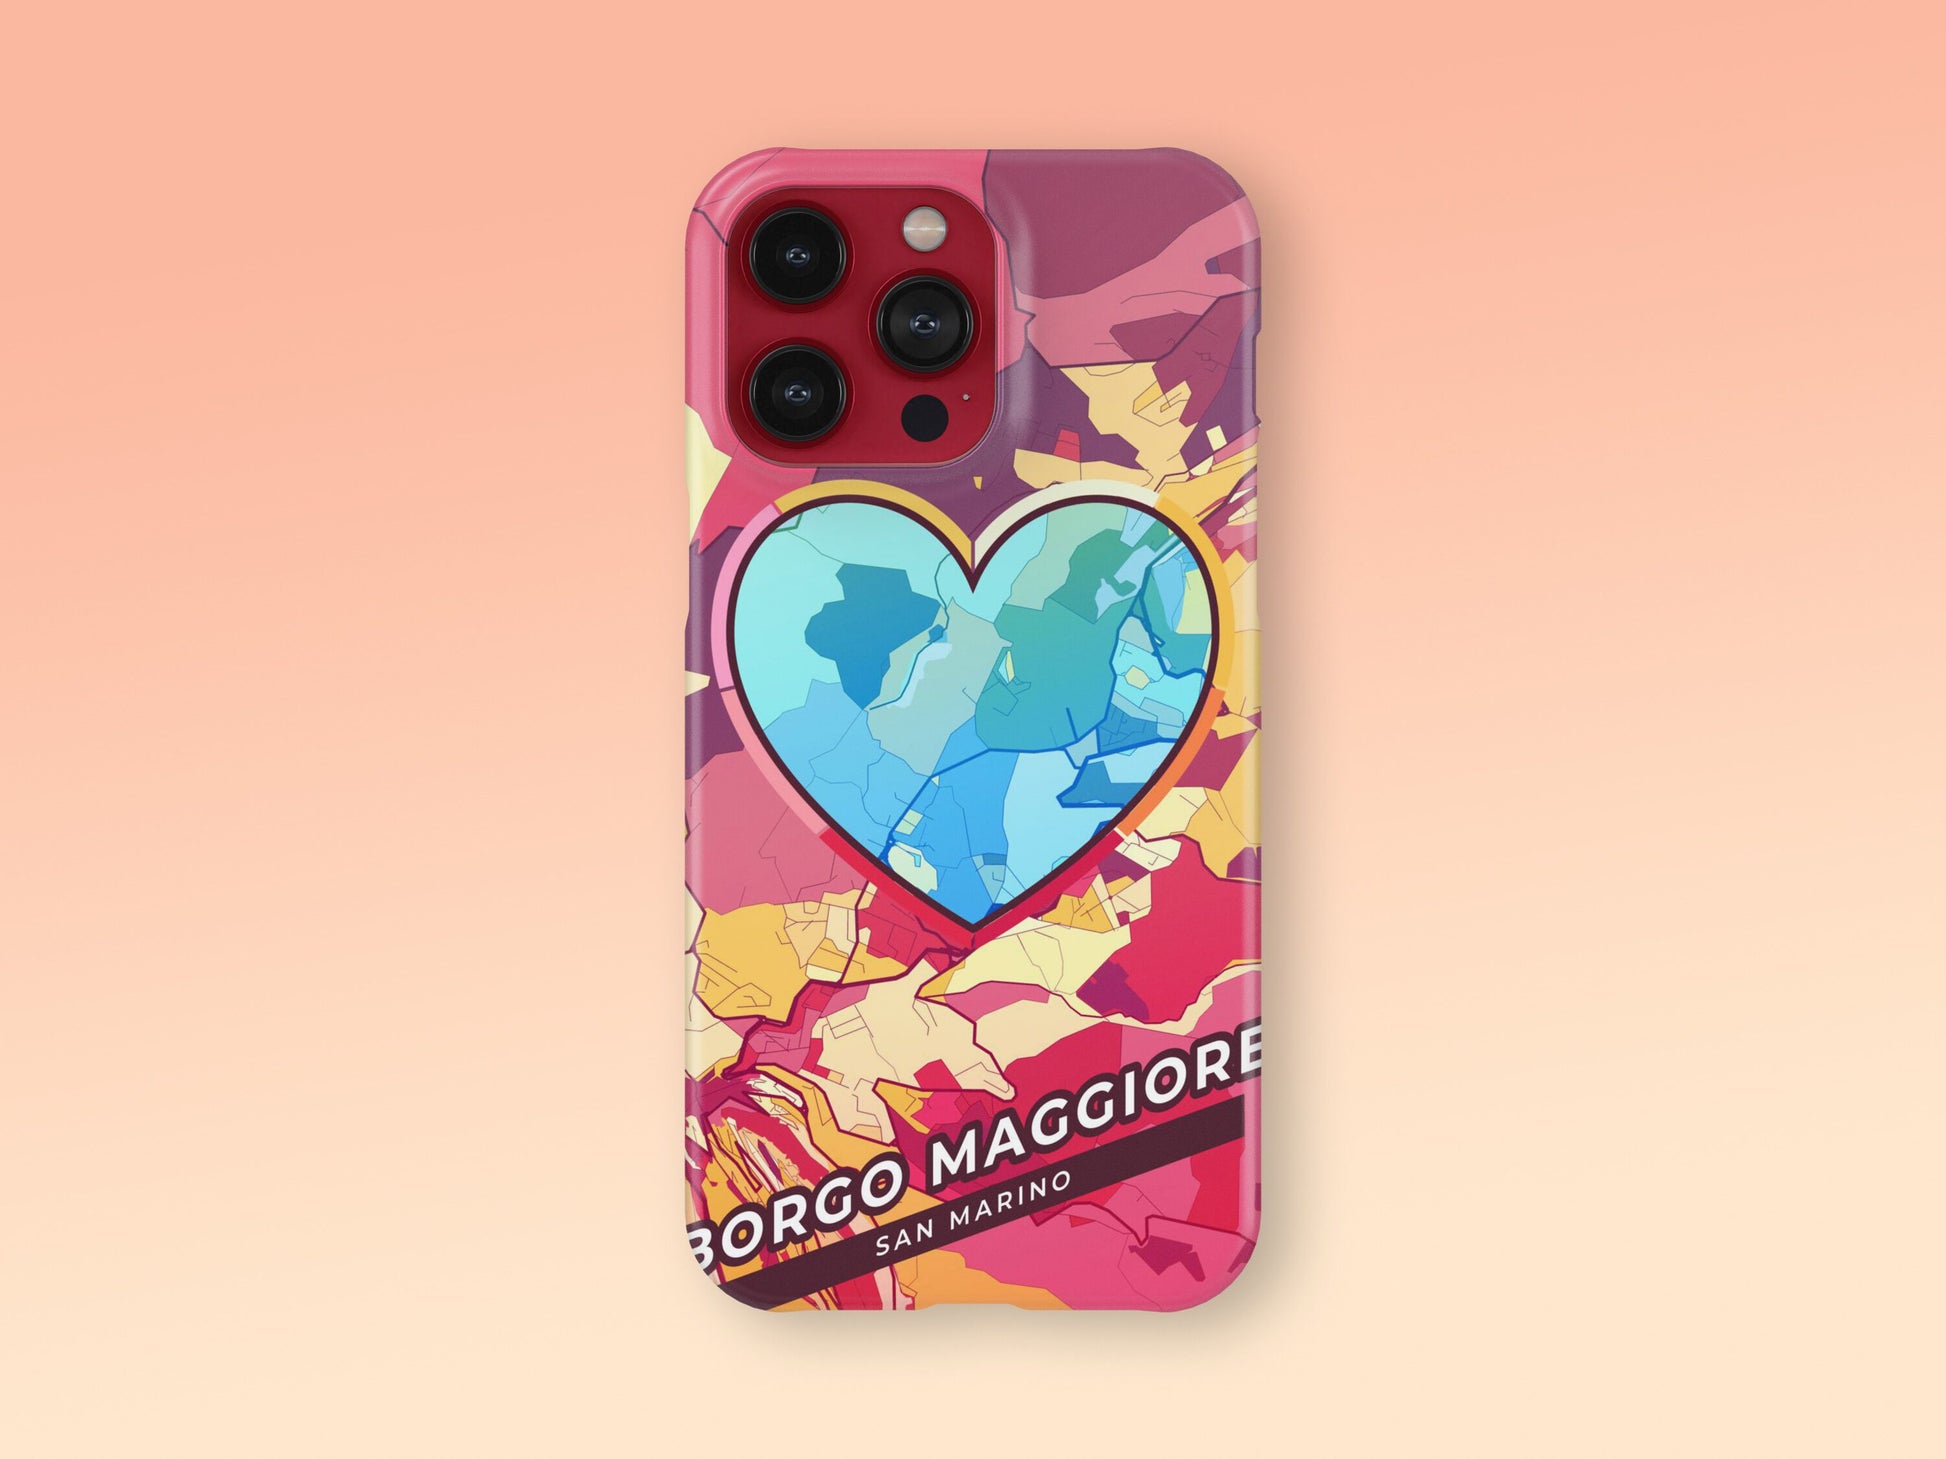 Borgo Maggiore San Marino slim phone case with colorful icon. Birthday, wedding or housewarming gift. Couple match cases. 2